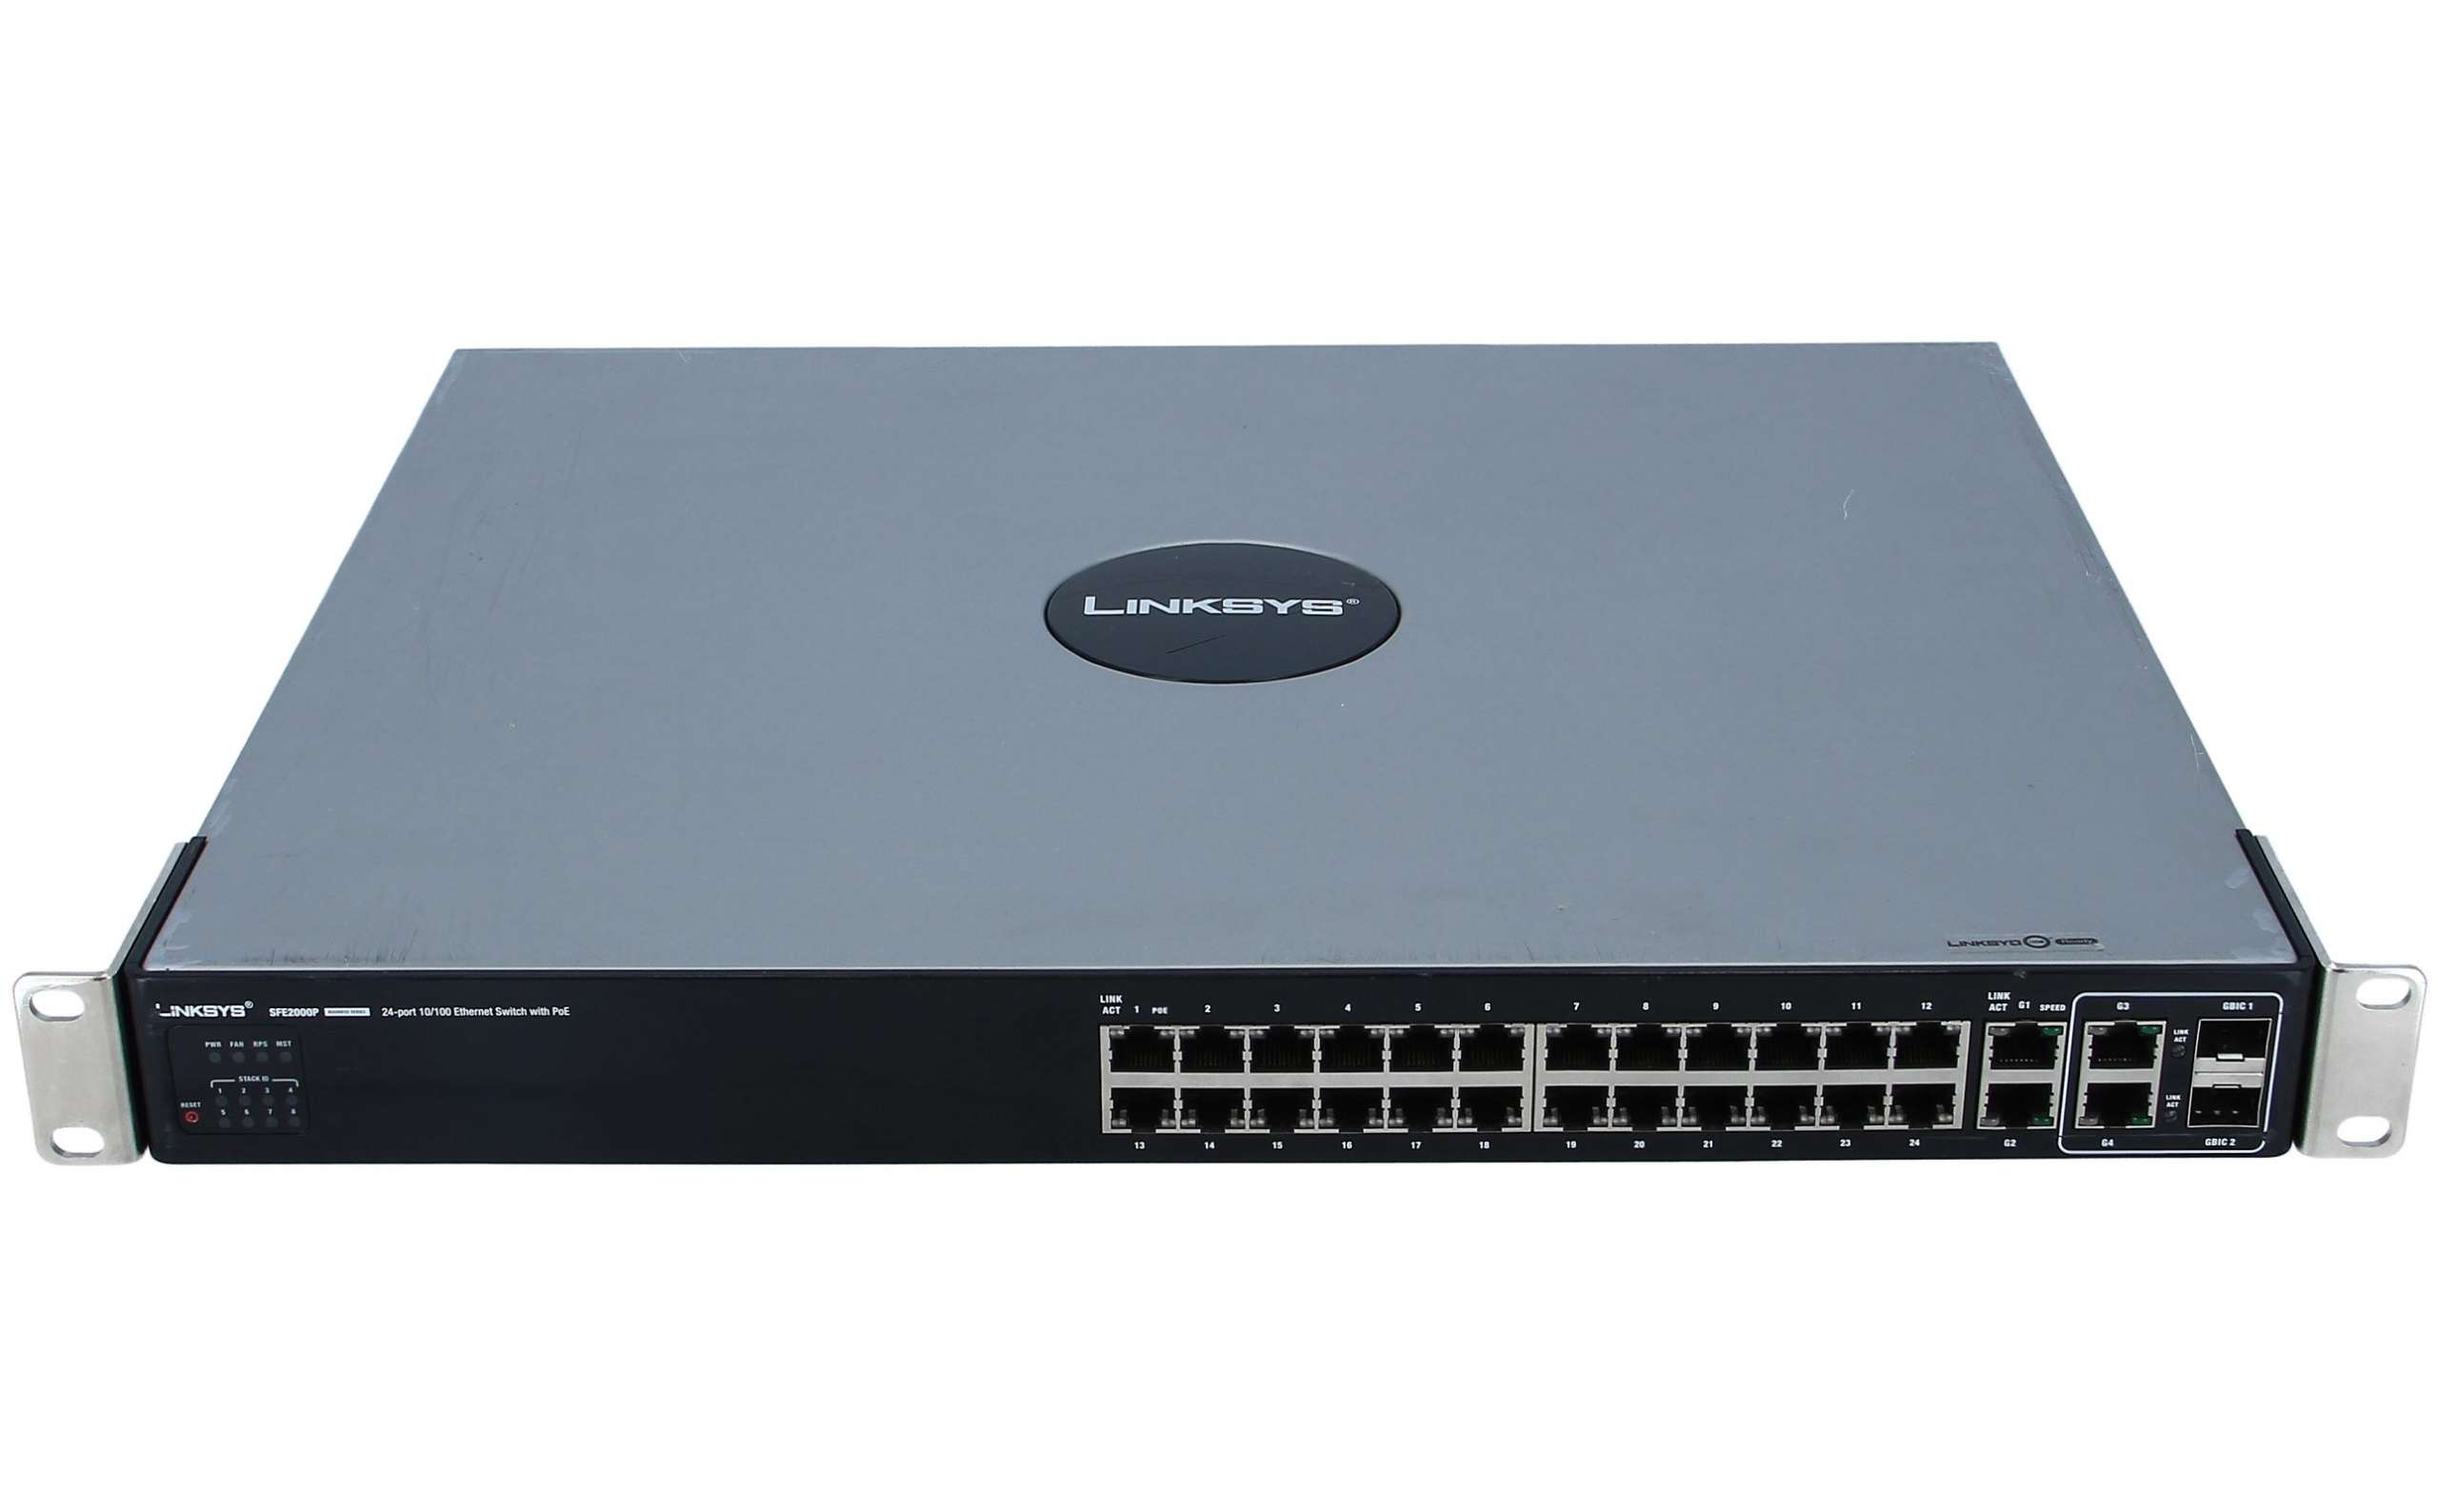 Cisco SFE2000 24 Port 10/100 Ethernet Switch 